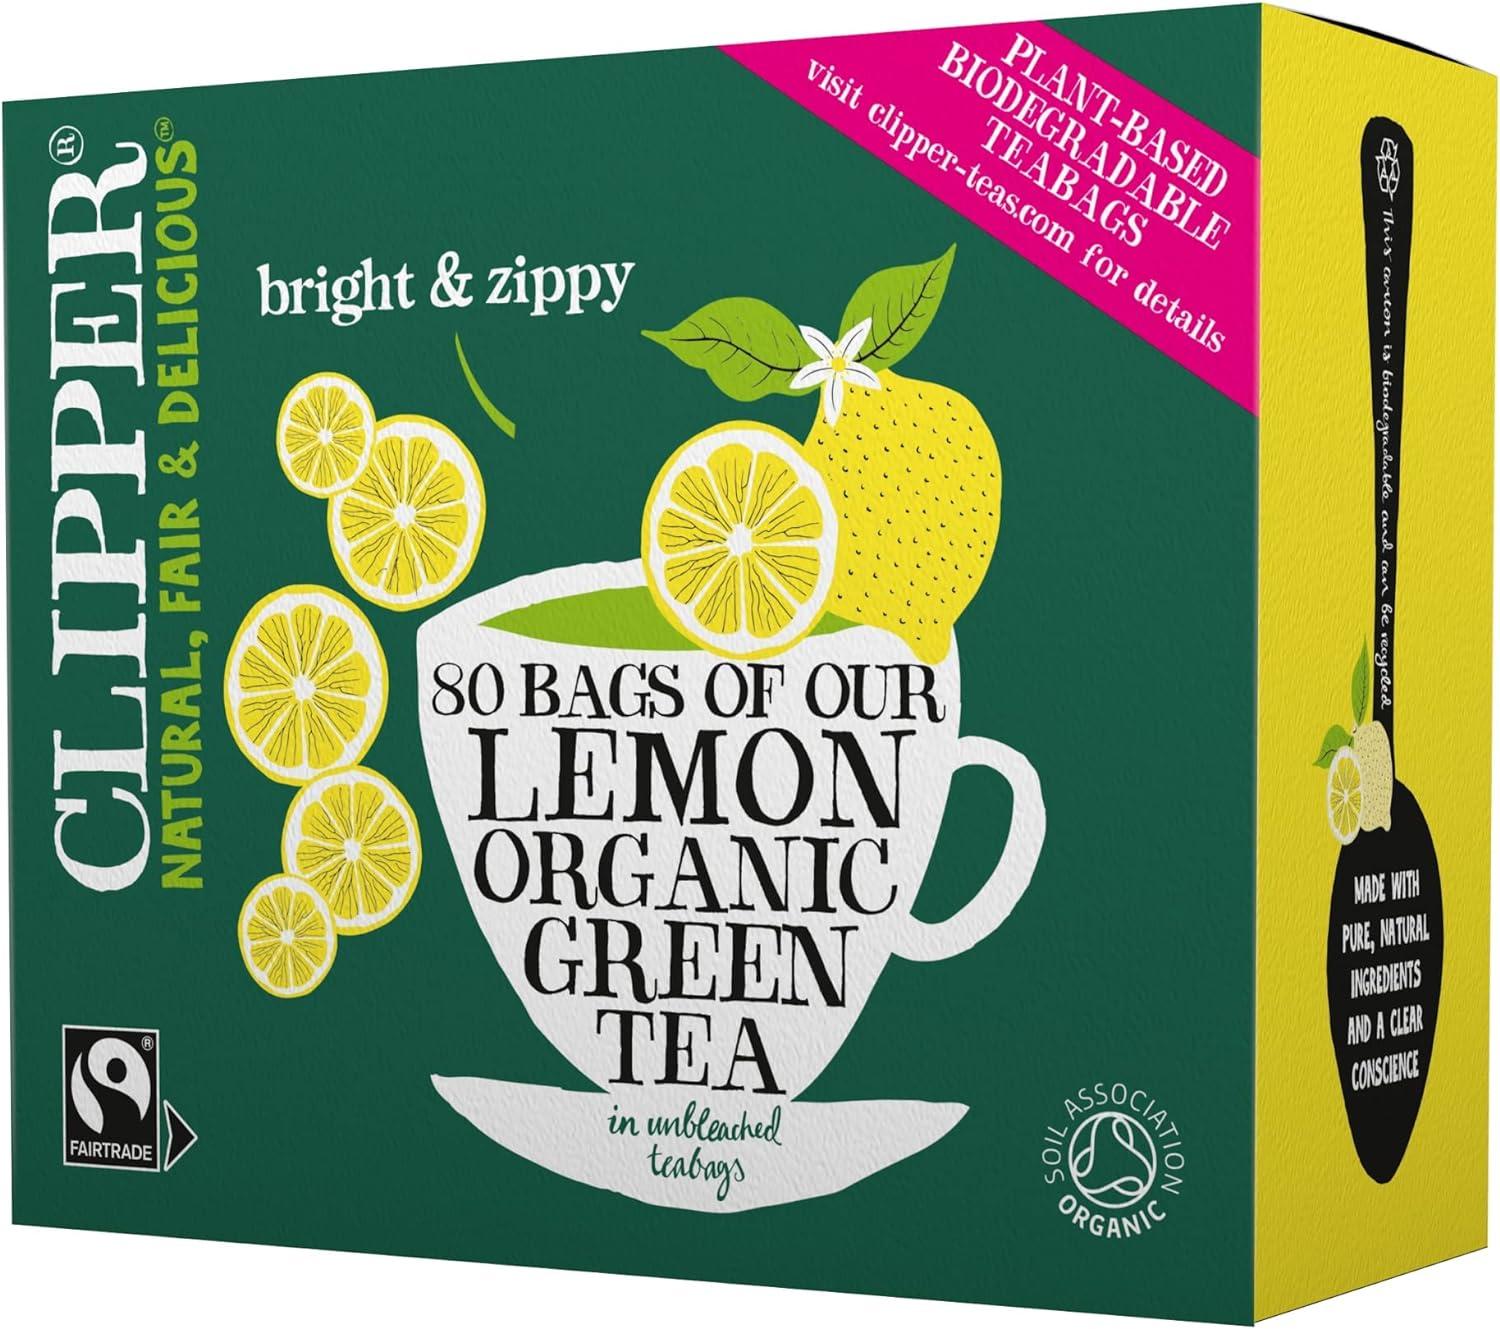 Eco-Conscious Tea Packaging : Clipper Teas tea bag